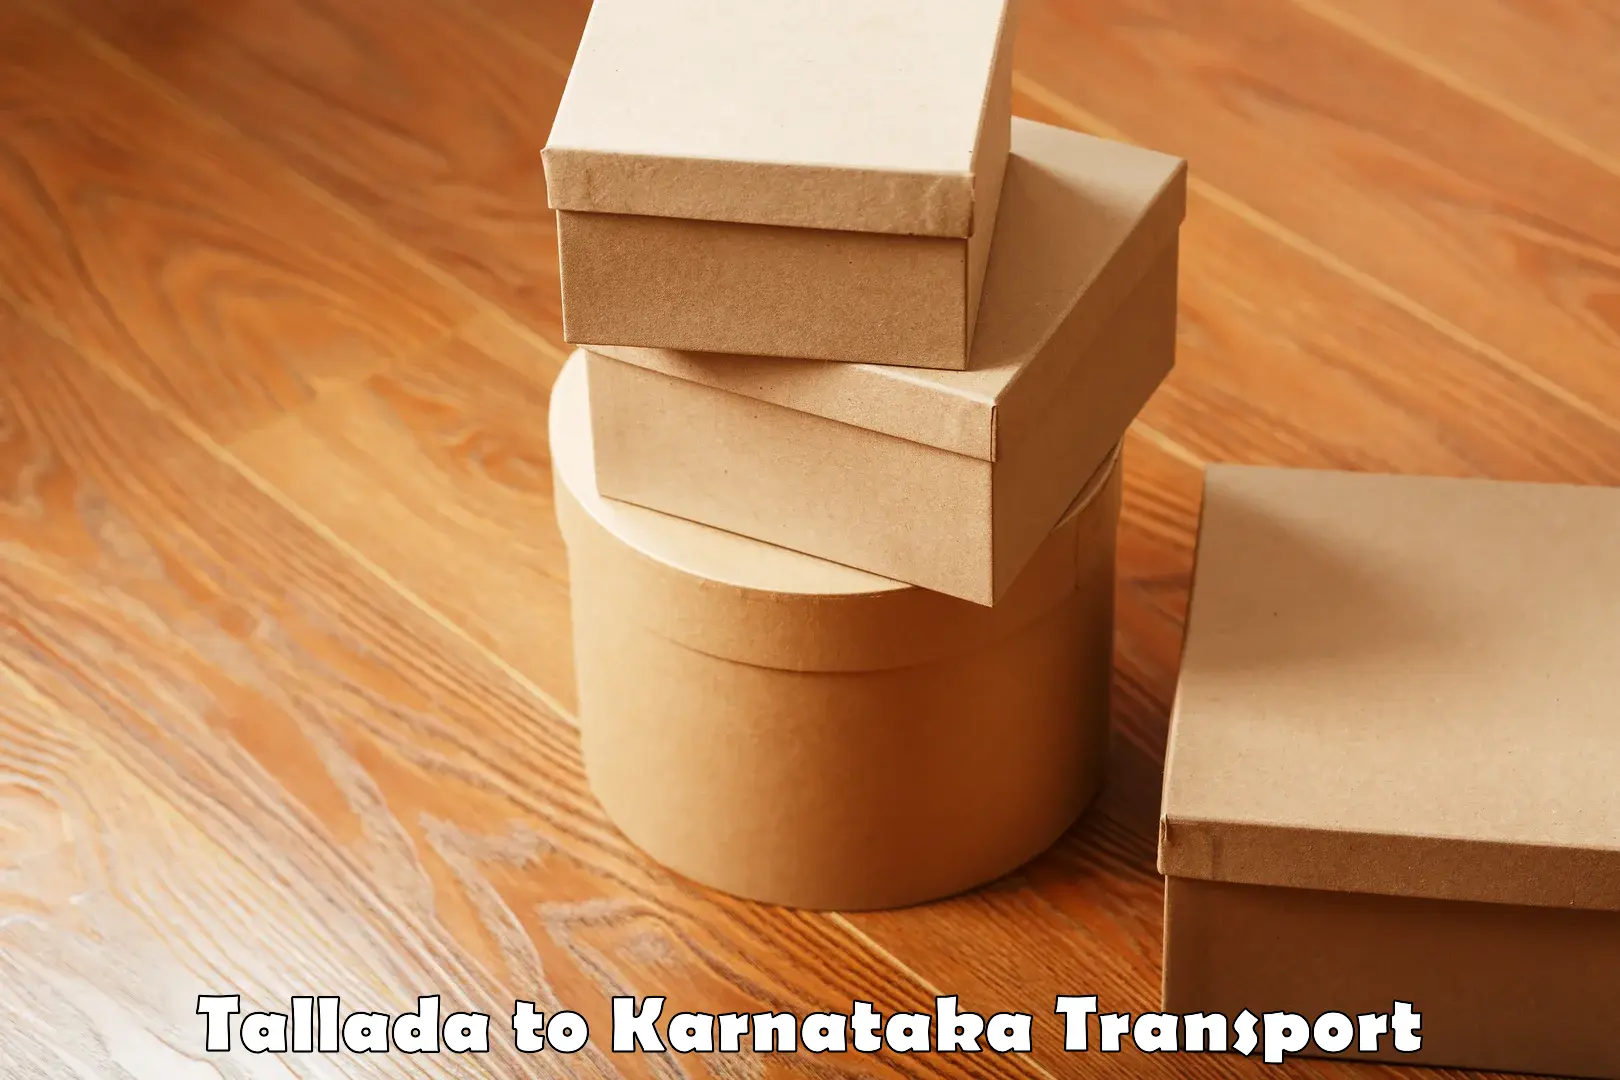 Two wheeler parcel service Tallada to Kundapura